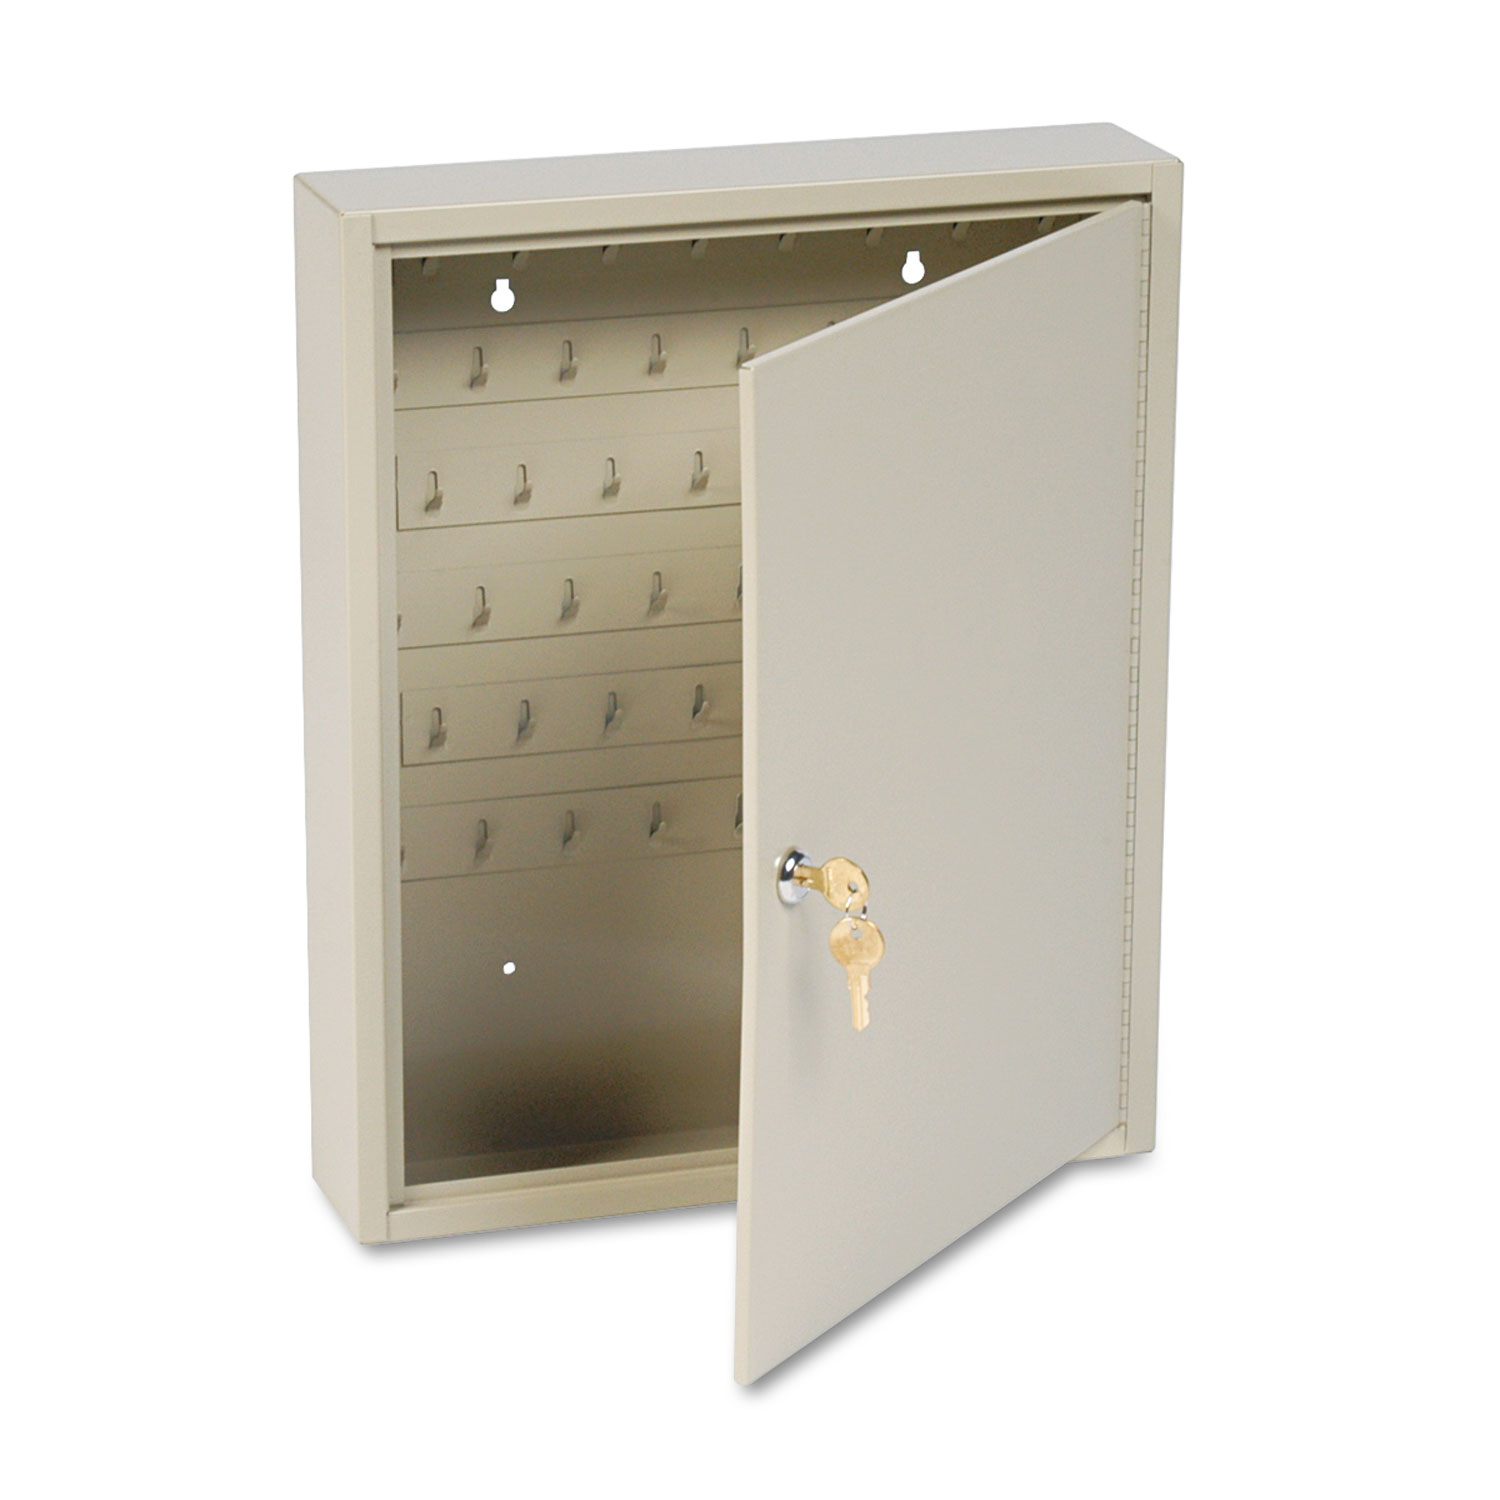 Dupli-Key Two-Tag Cabinet, 60-Key, Welded Steel, Sand, 14 x 3 1/8 x 17 1/2